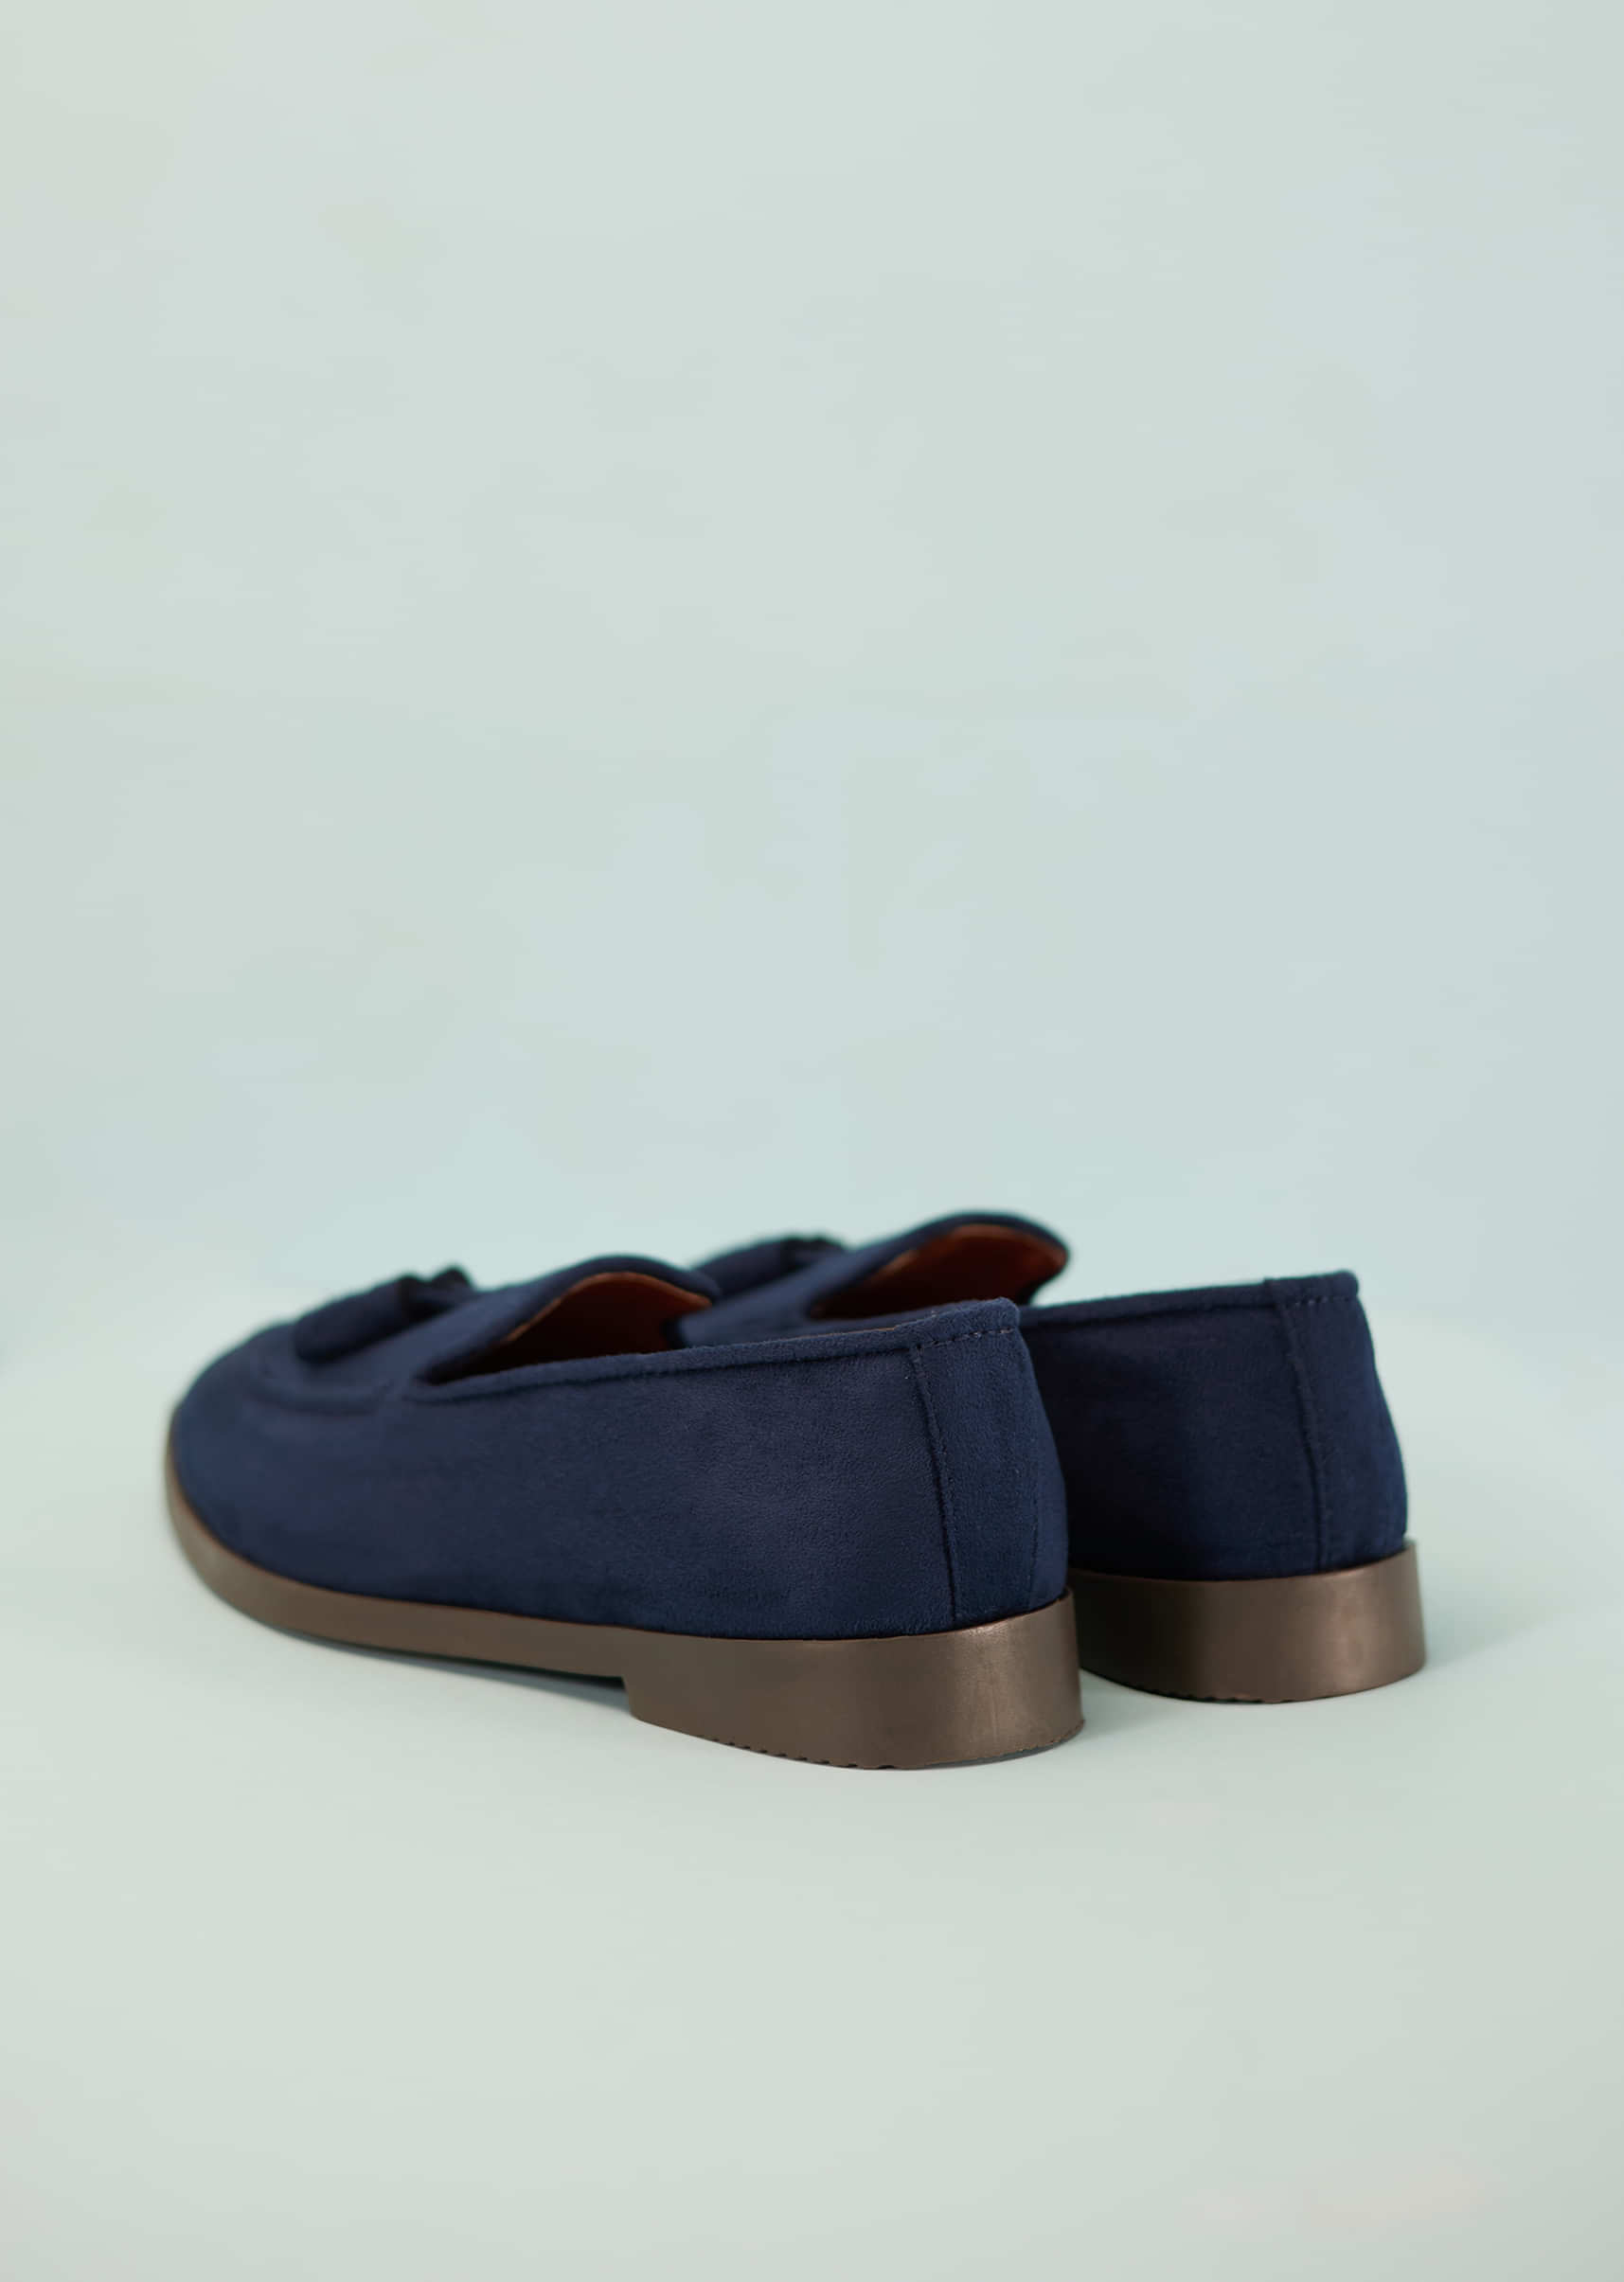 Buy Indigo Blue Solid Tassel Loafers For Men In Suede KALKI Fashion India